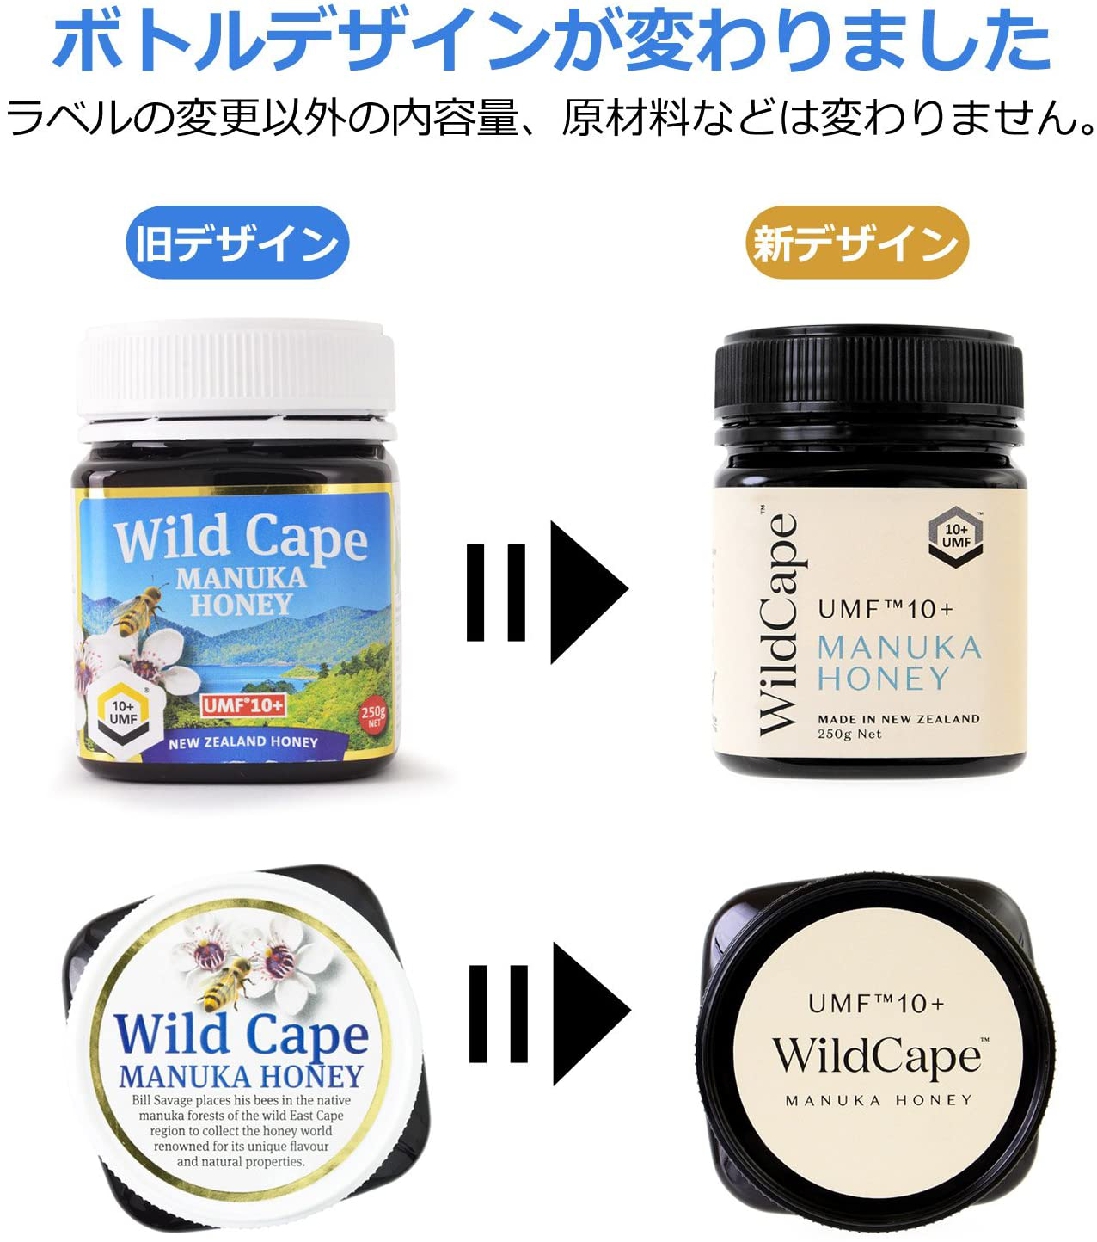 Wild Cape(ワイルドケープ) UMF 8+ Manuka Honeyの商品画像5 